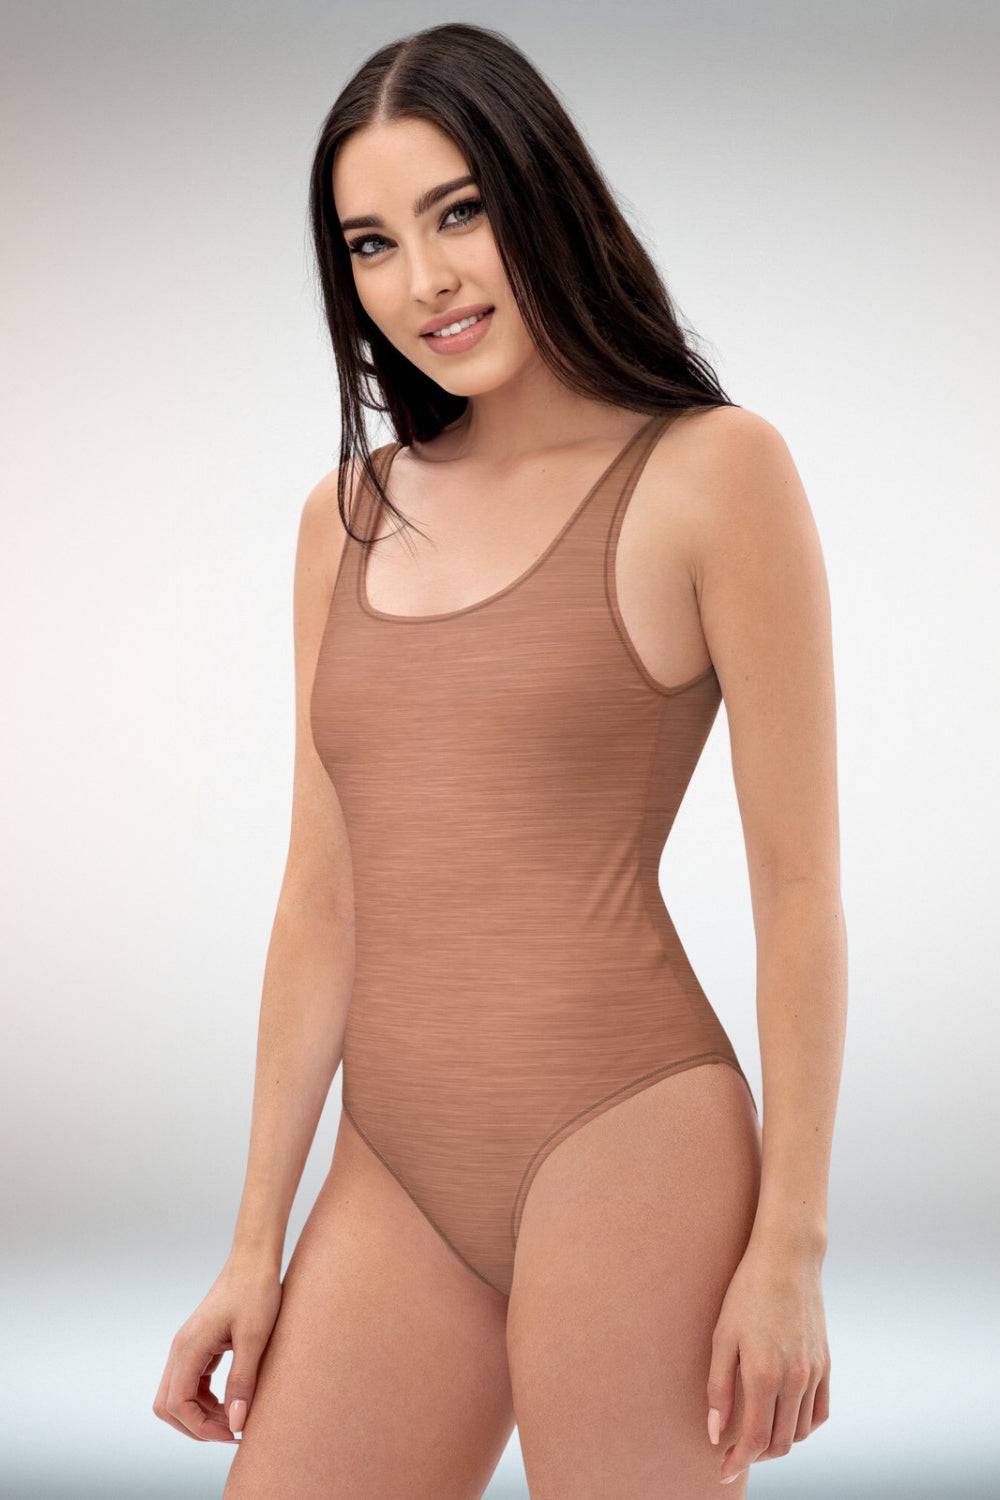 Copper Brown One Piece Swimsuit - TGC Boutique - One Piece Swimsuit